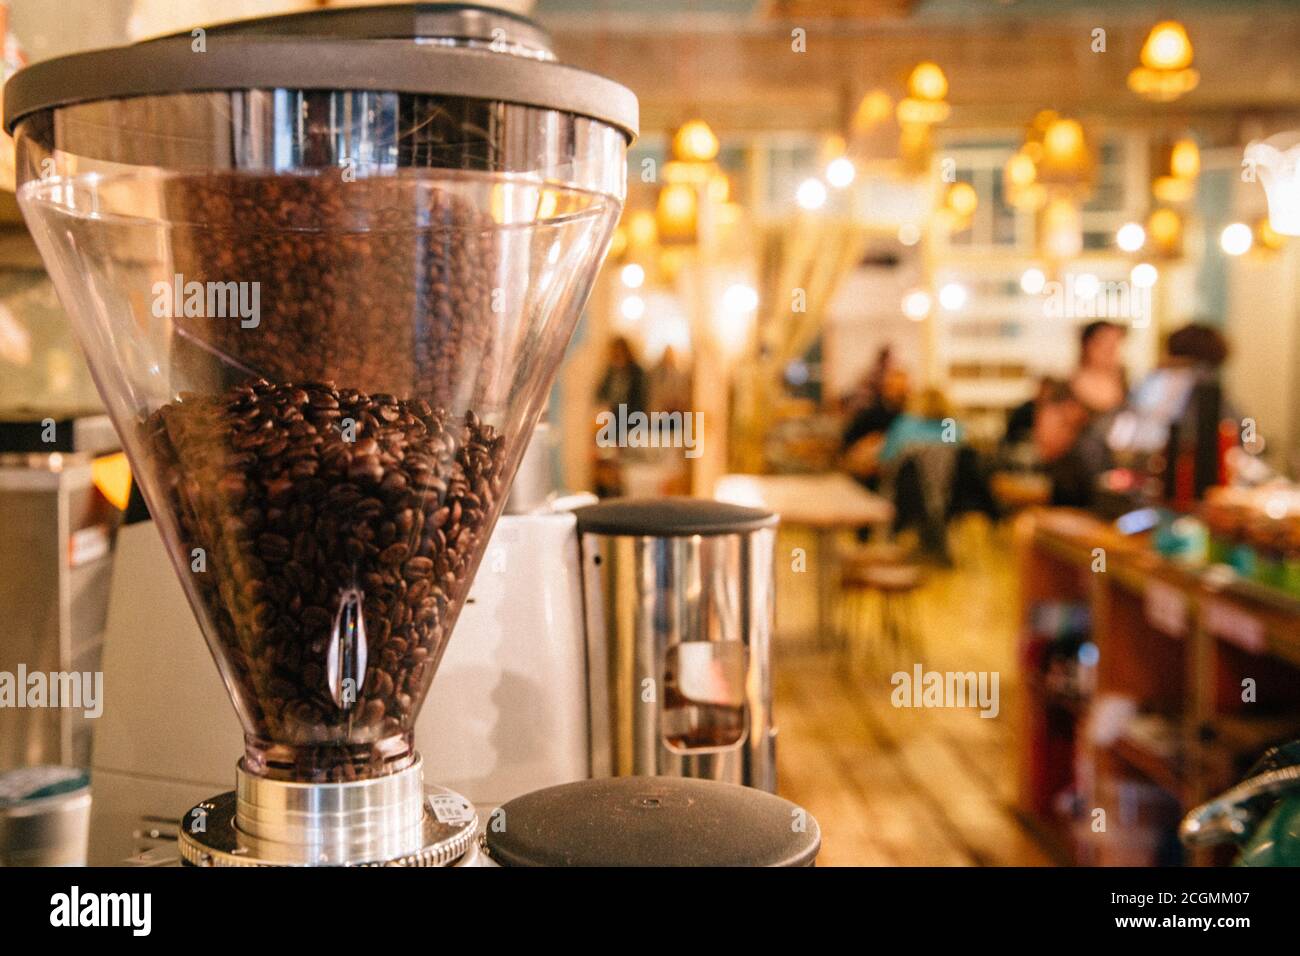 Artisan Coffee school and cafe Stock Photo